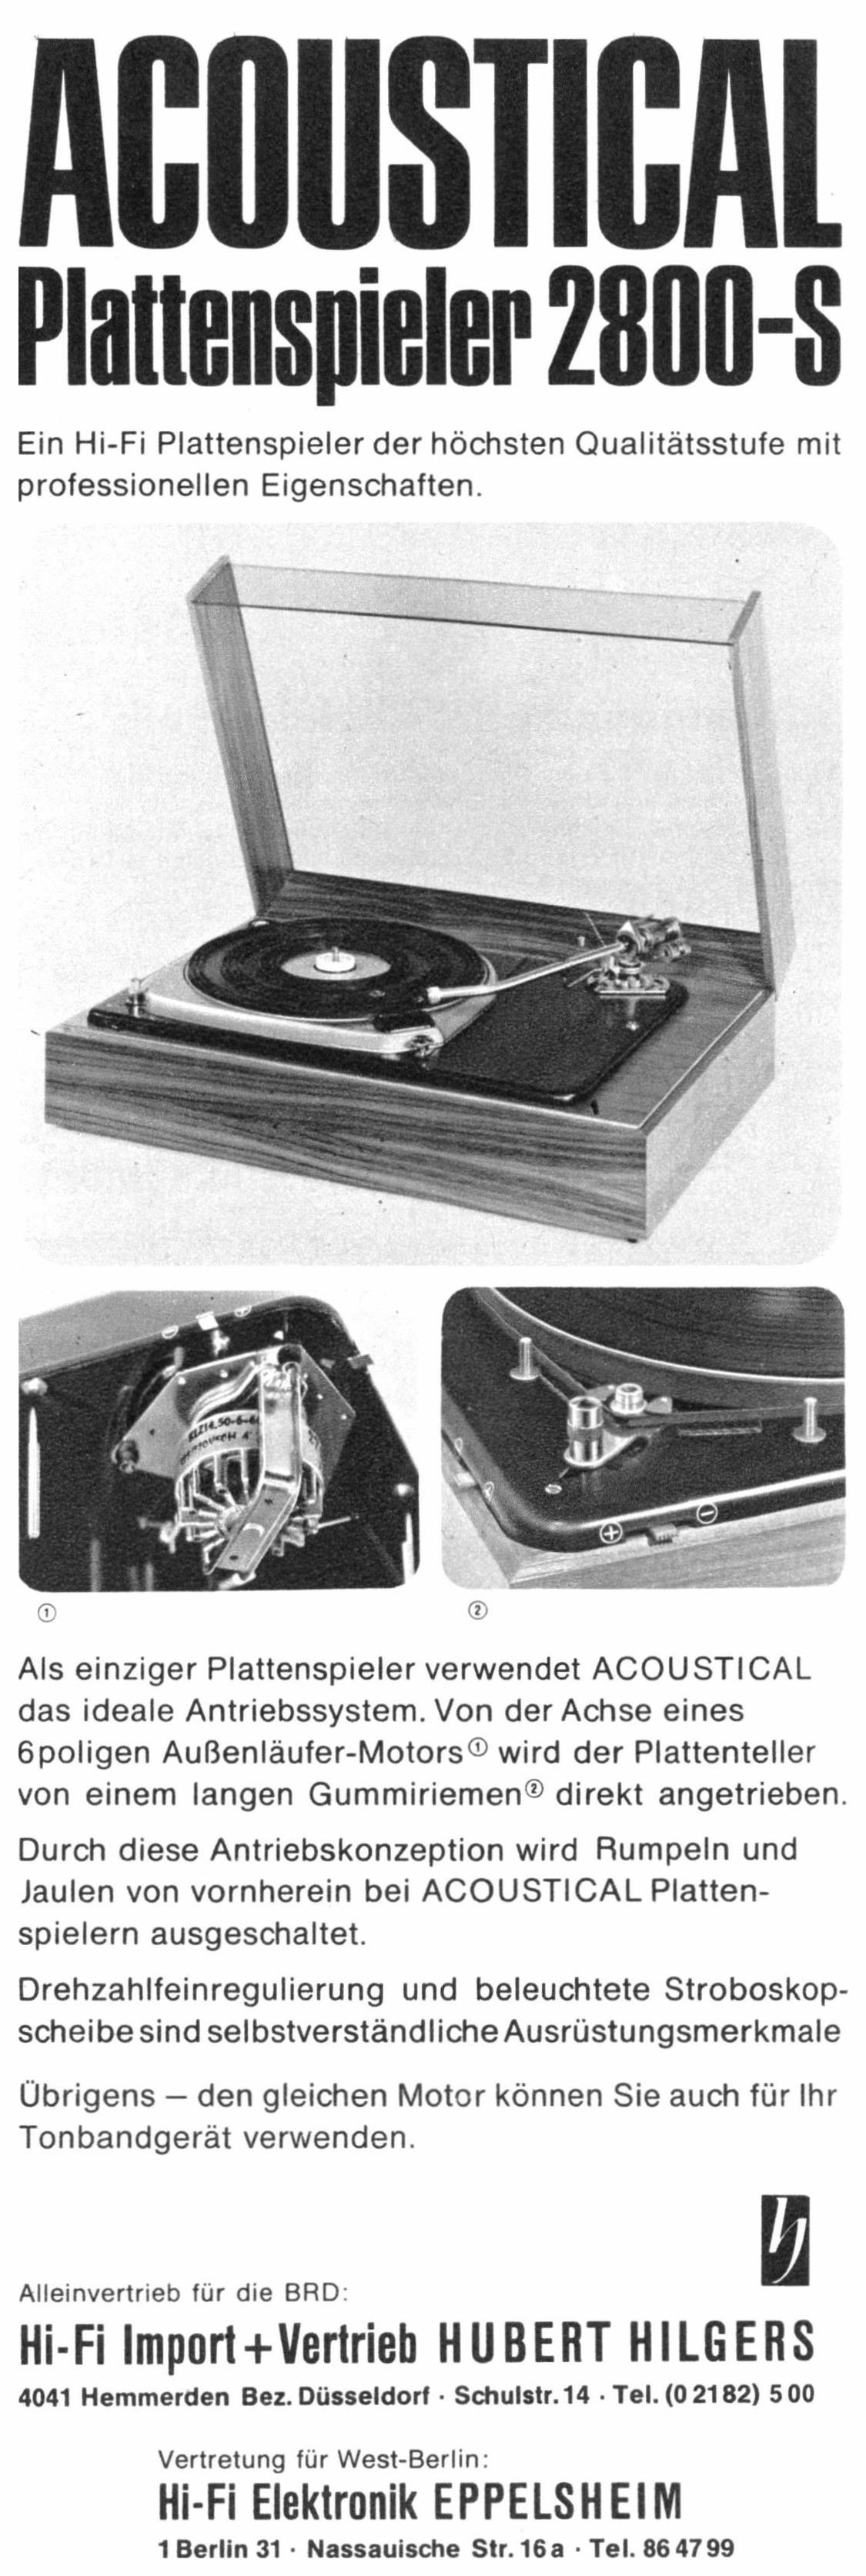 Acoustical 1967 0.jpg